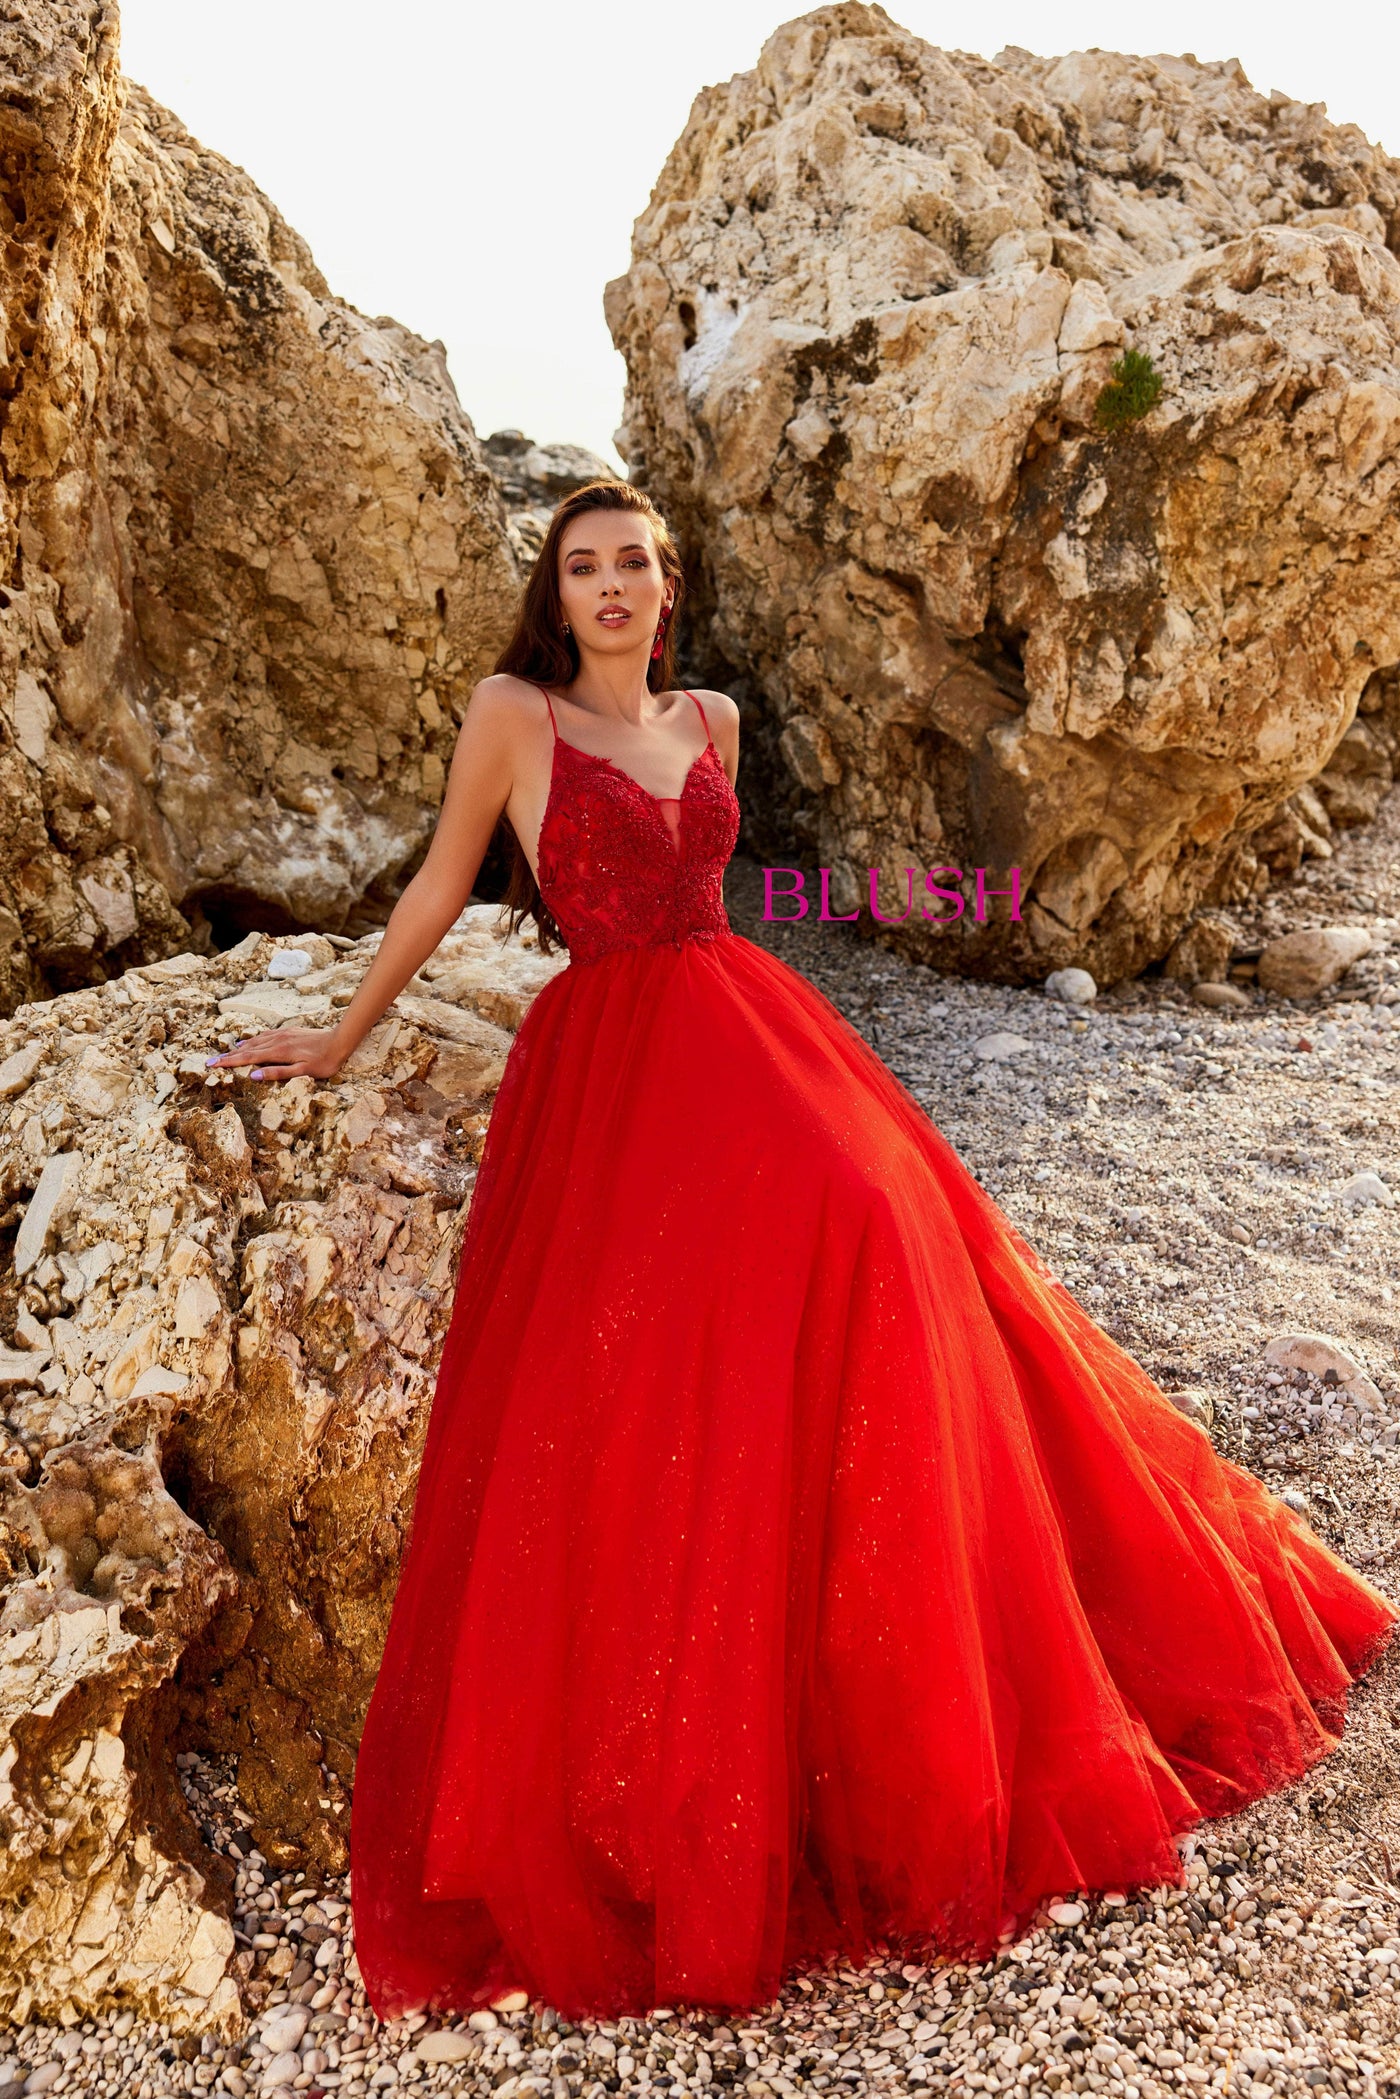 Blush by Alexia Designs 12150 - Lace Ornate Bodice Prom DressSpecial Occasion Dress